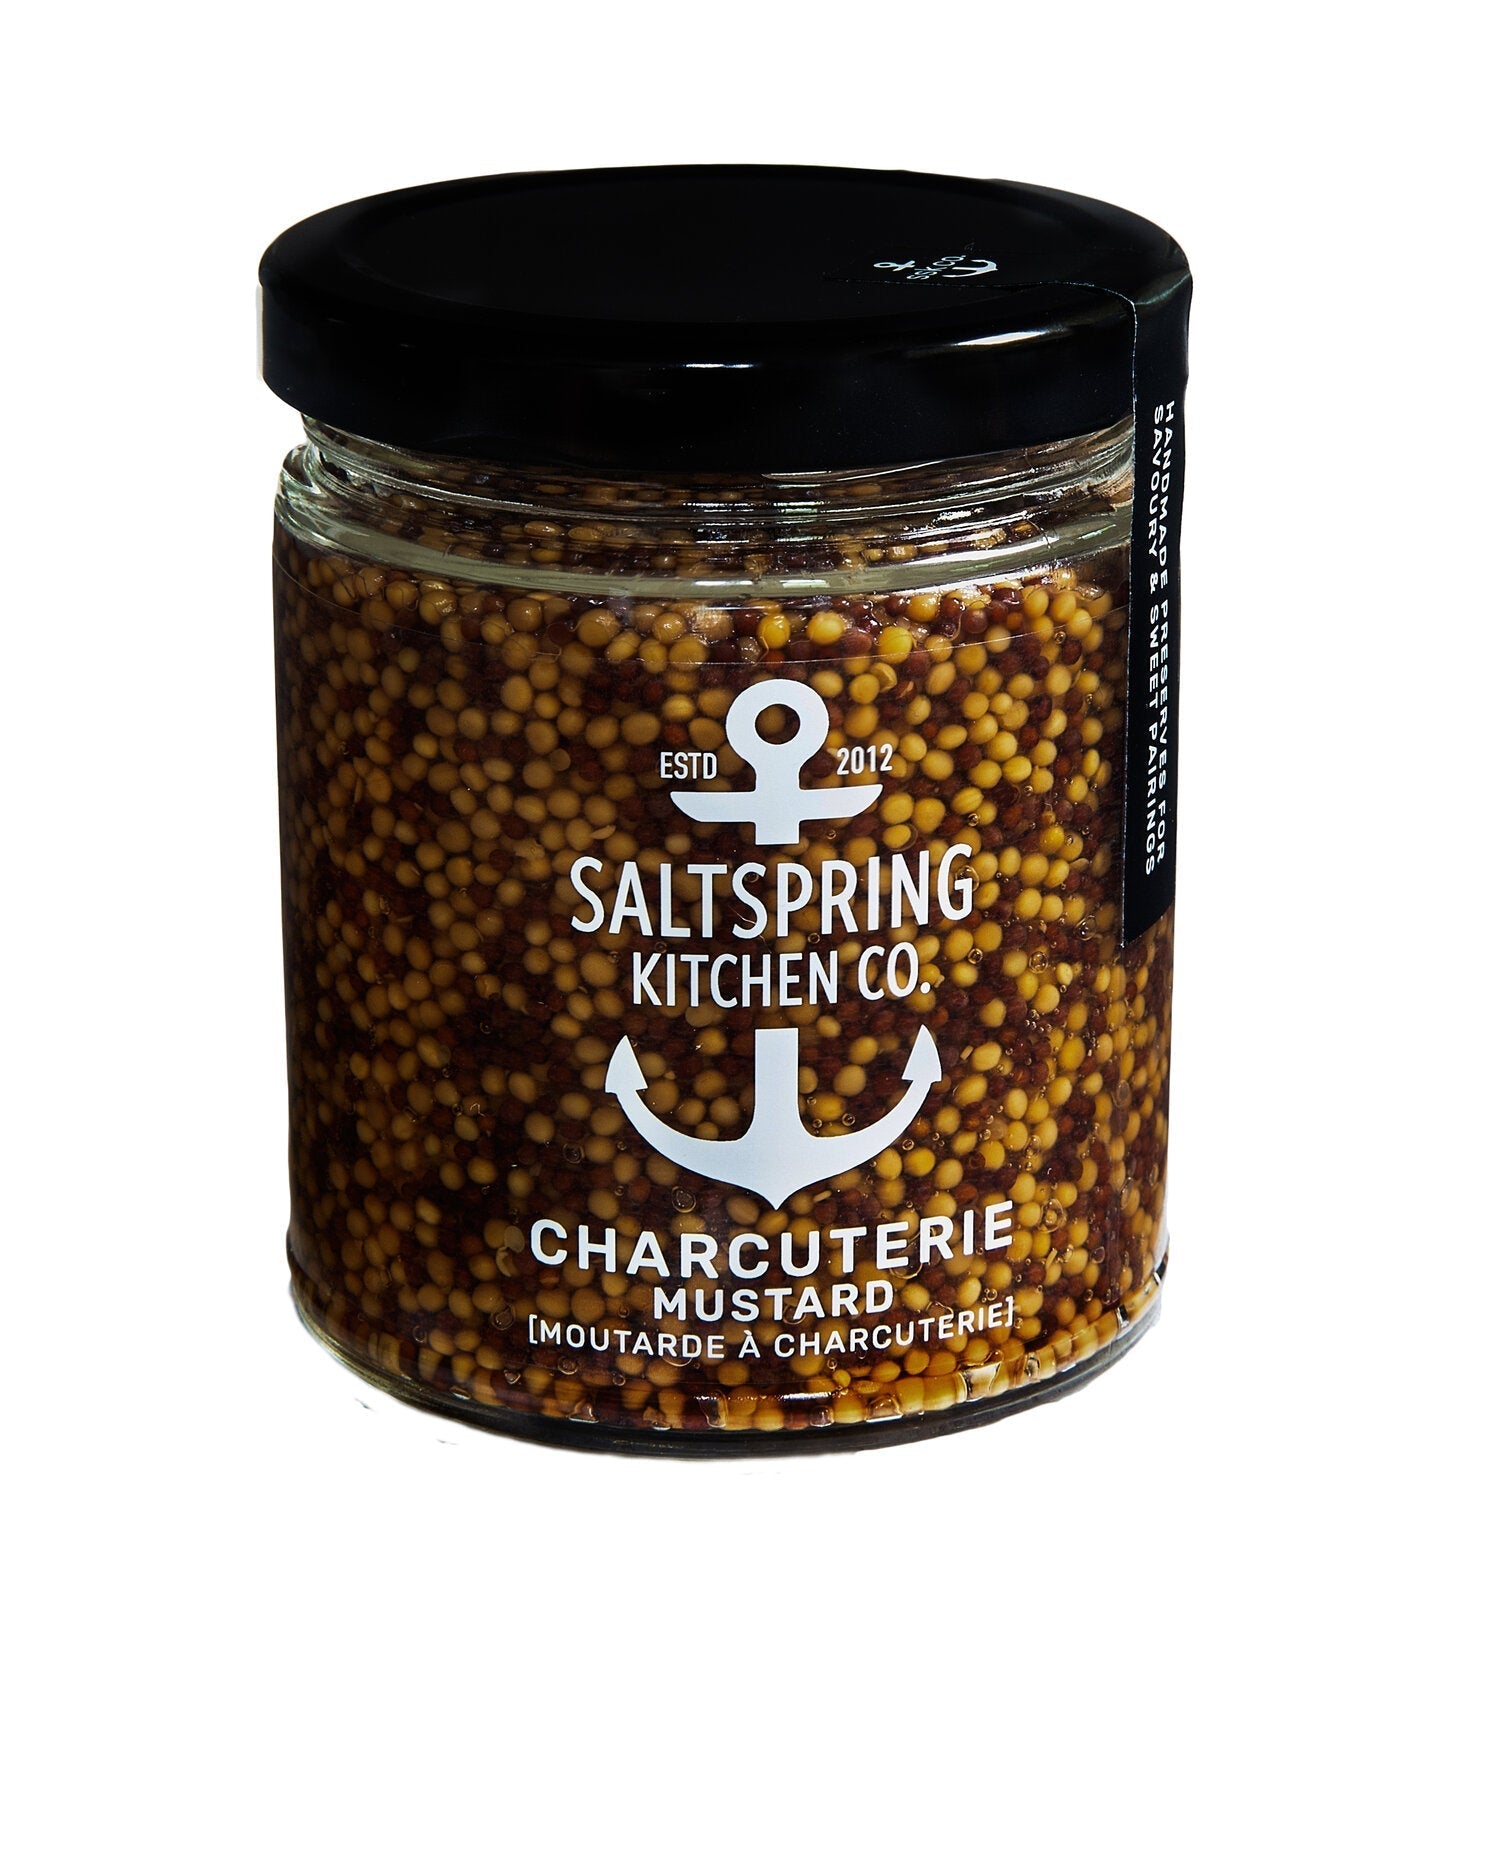 Saltspring Charcuterie Mustard